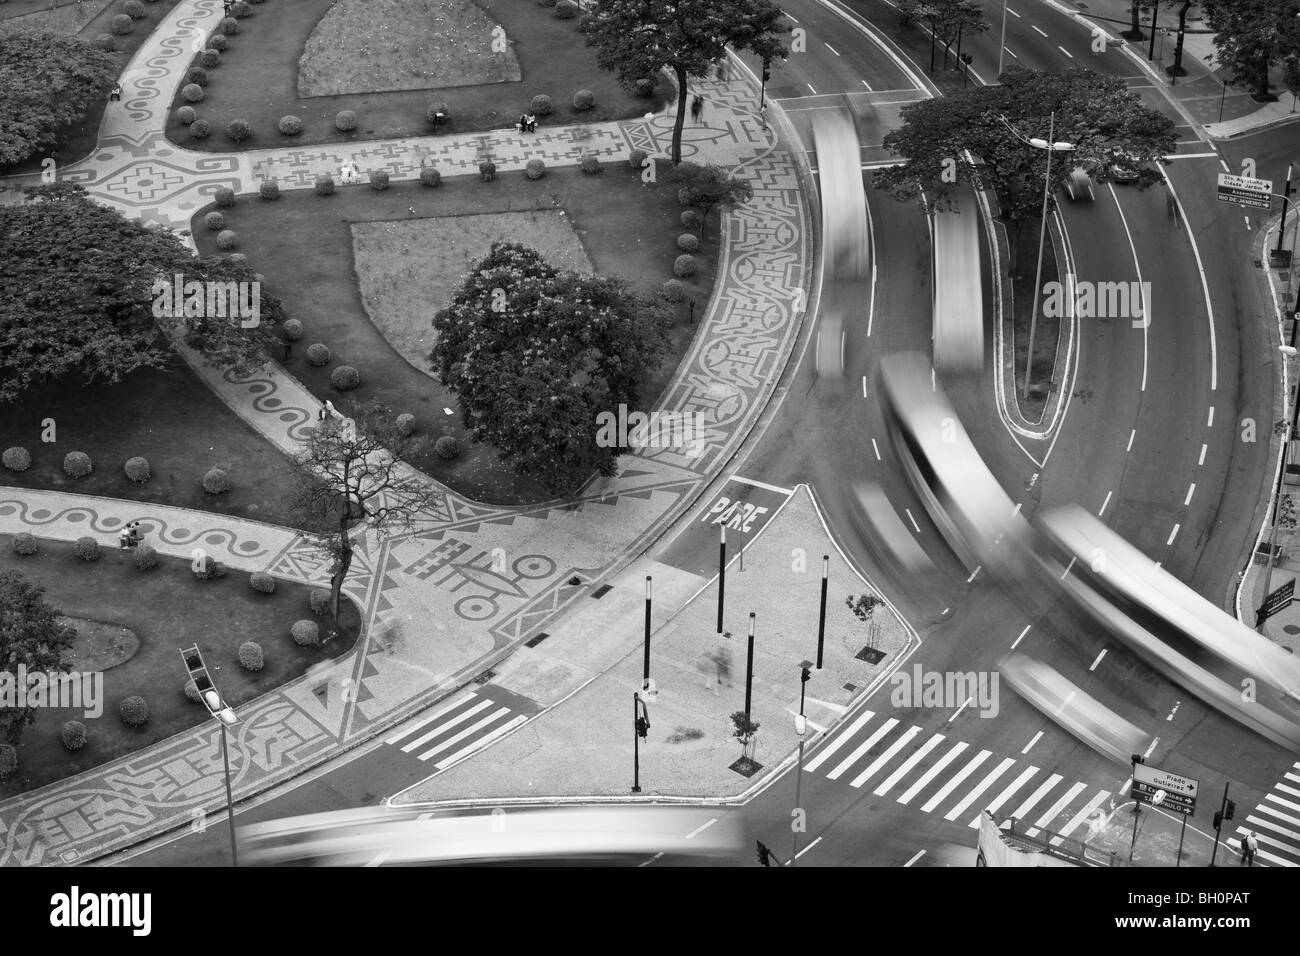 Aerial view of Raul Soares Square, in Belo Horizonte downtown, Minas Gerais, Brazil. Stock Photo